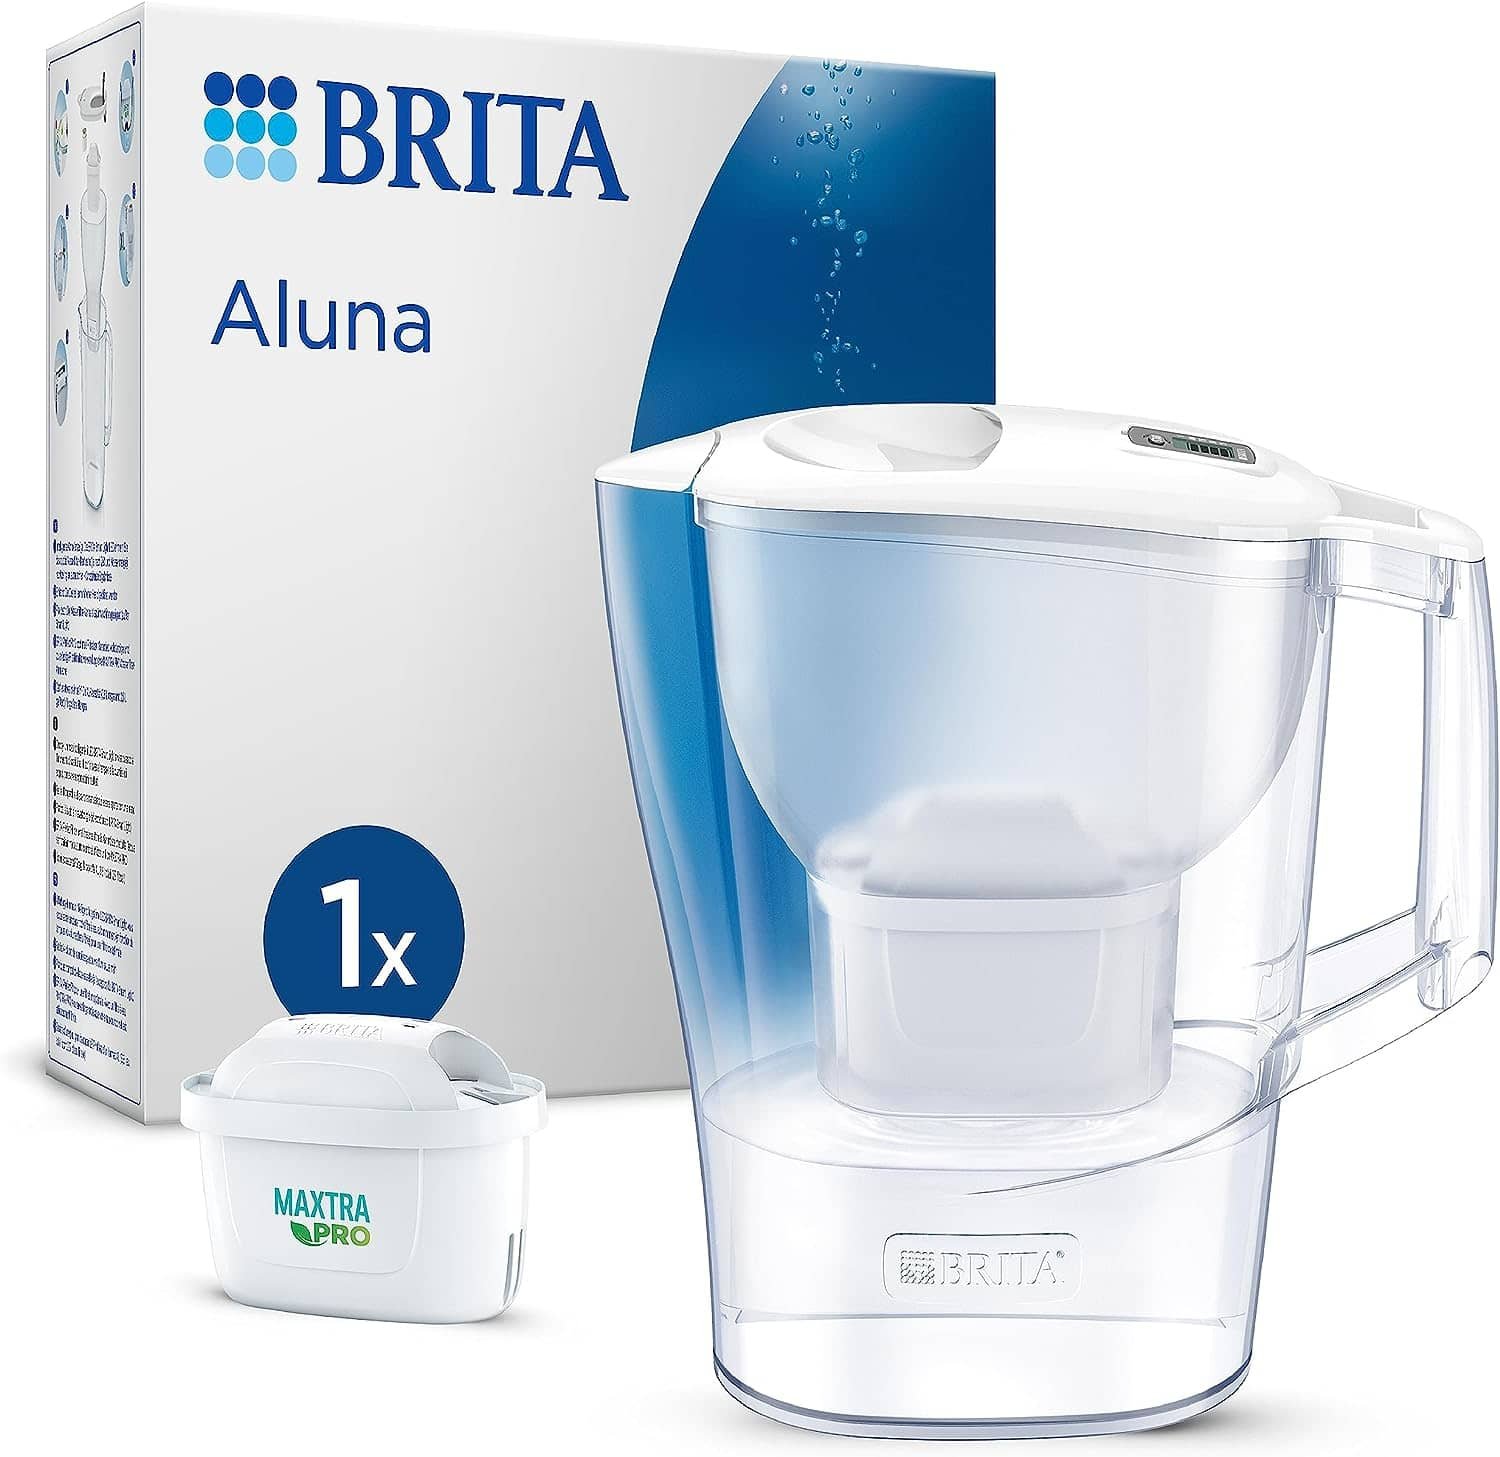 BRITA Aluna Fridge Water Filter Jug - White